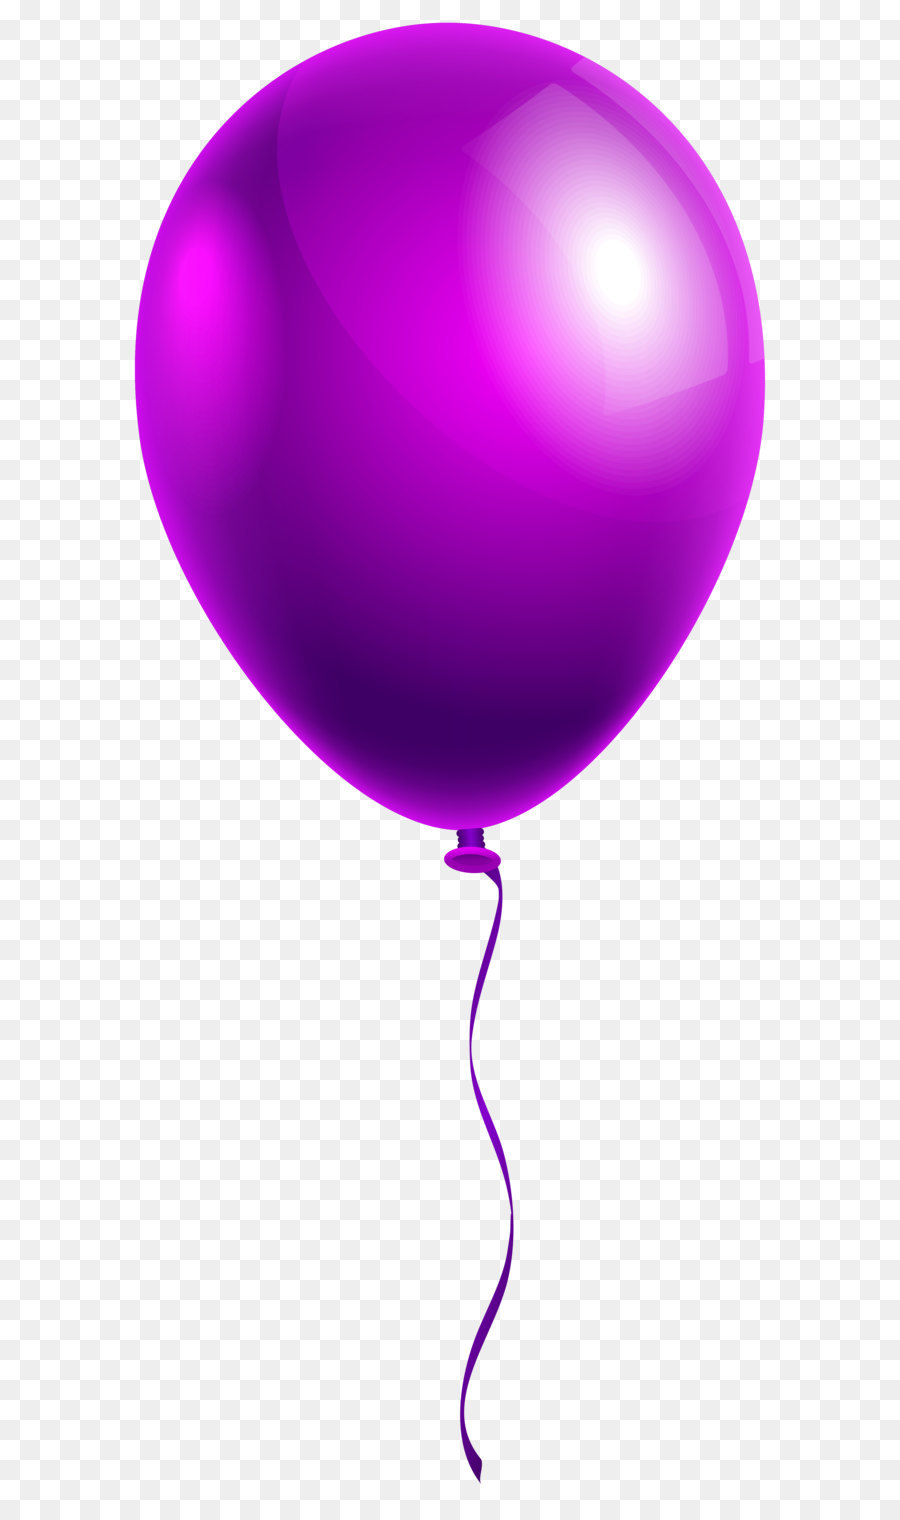 Birthday Balloon Cartoon png download - 2743*6361 - Free ...